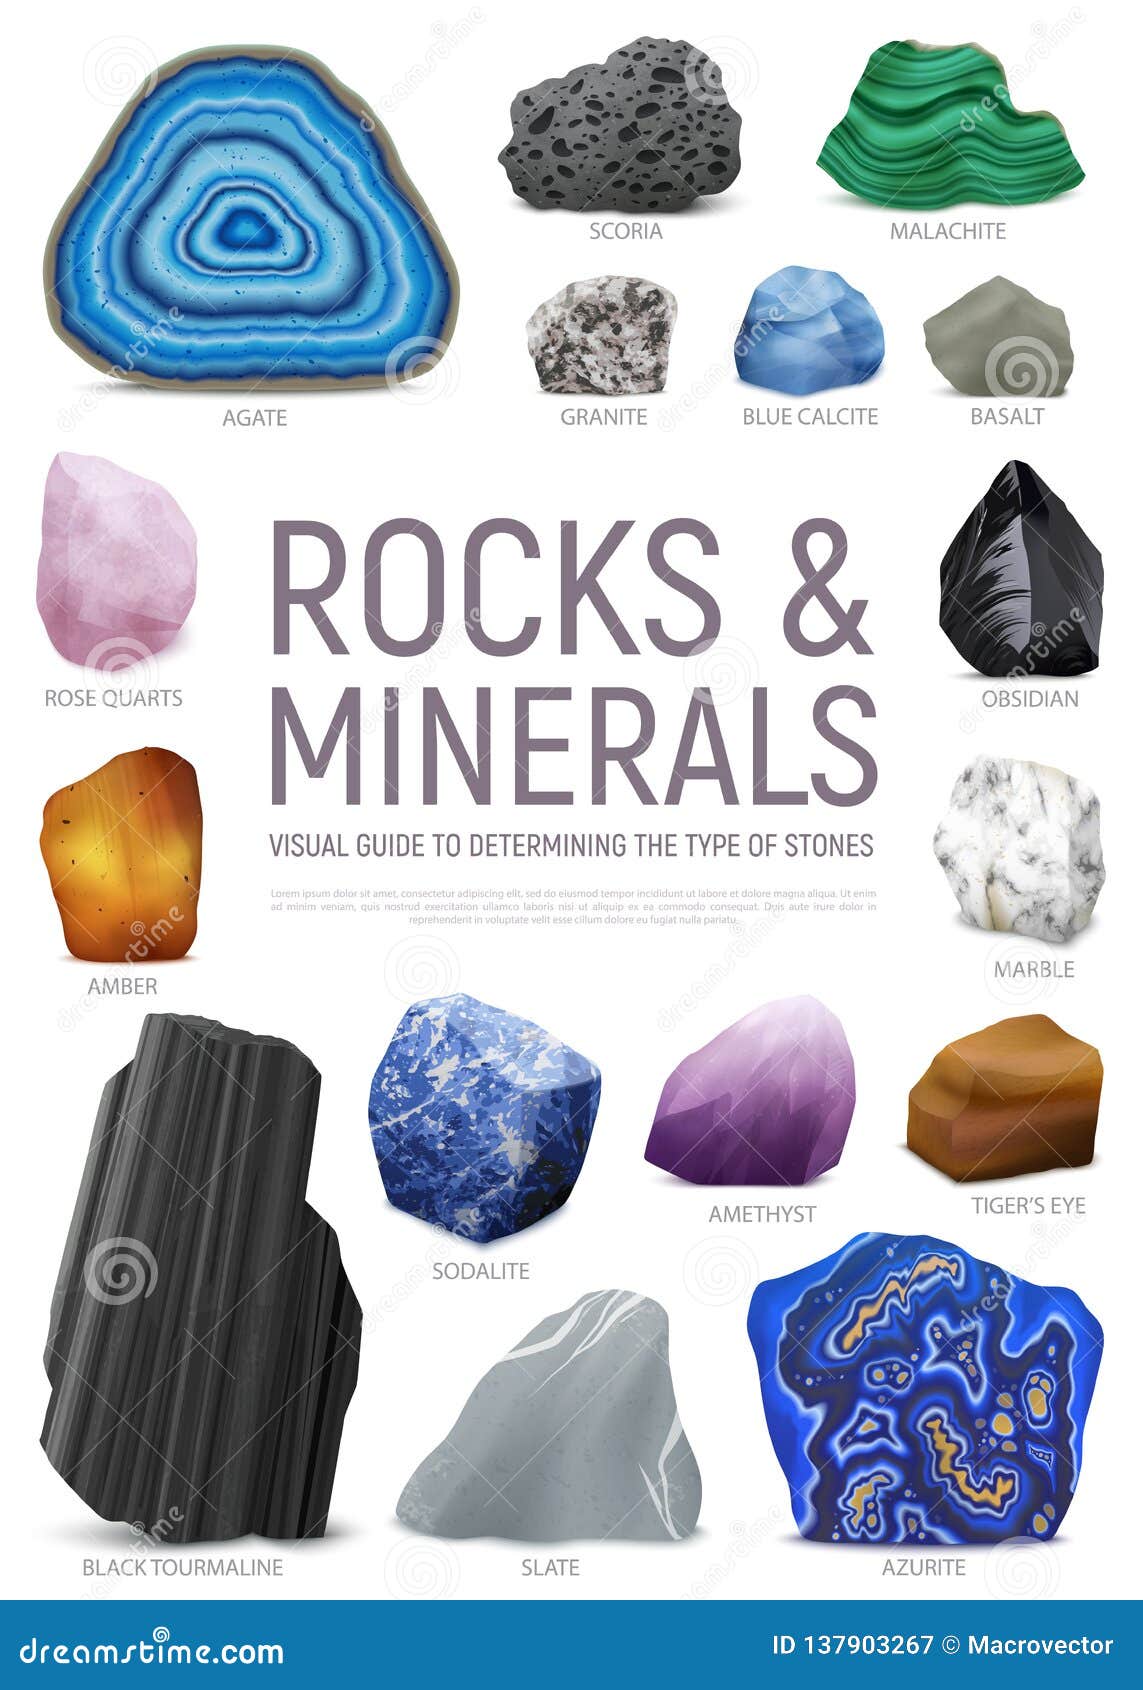 realistic stone mineral visual guide icon set